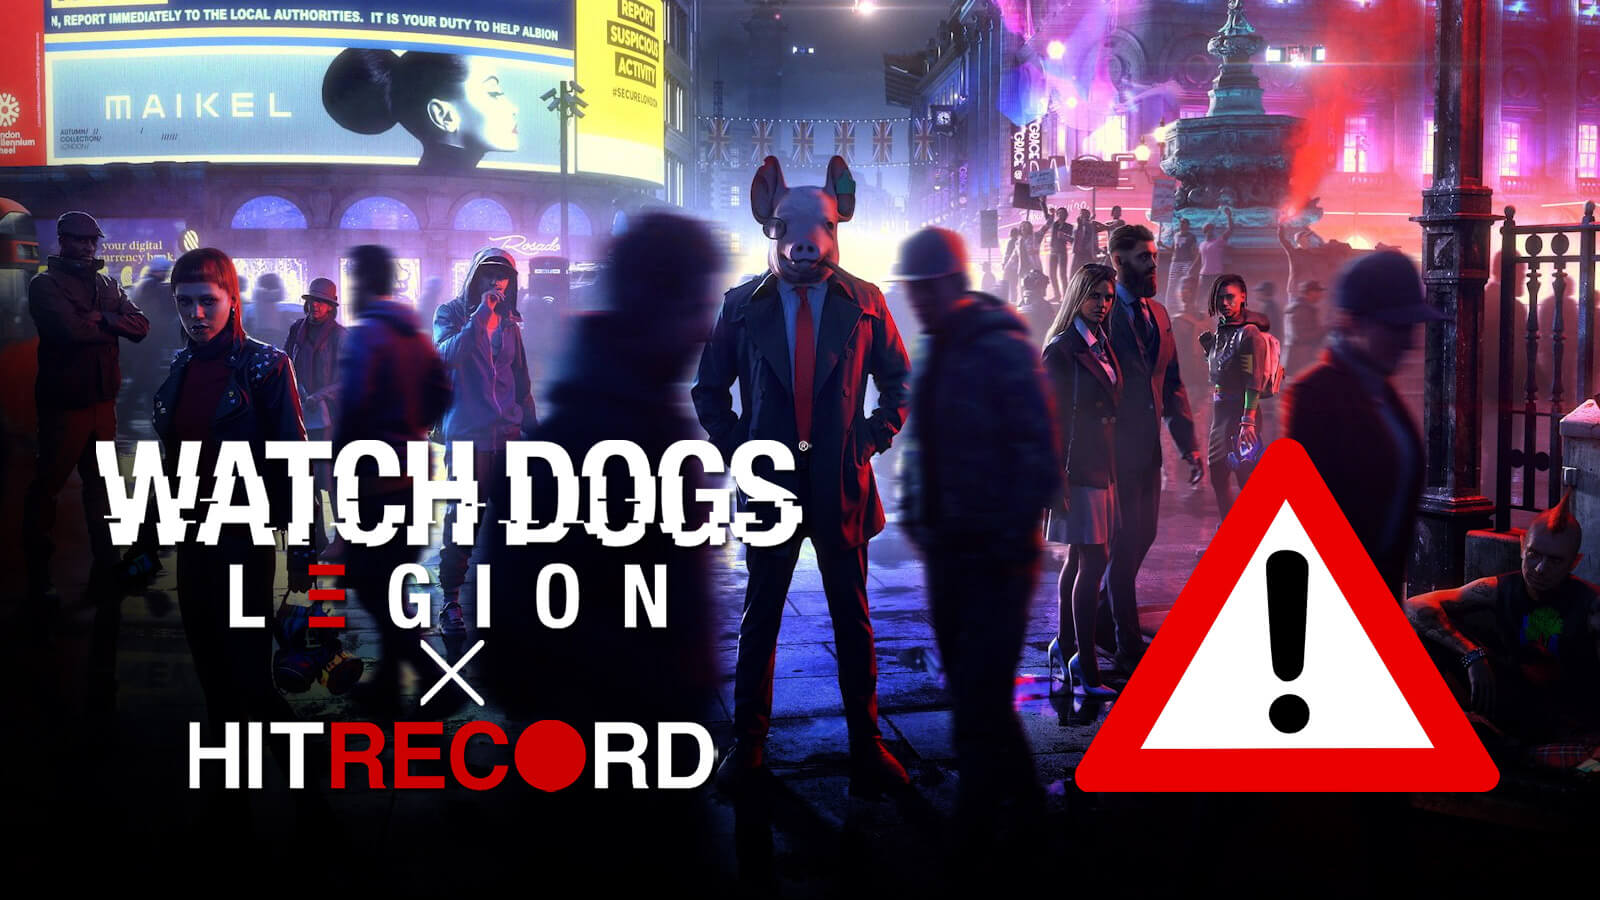 Watch Dogs Legion And Hitrecord Collaboration Creates Controversy